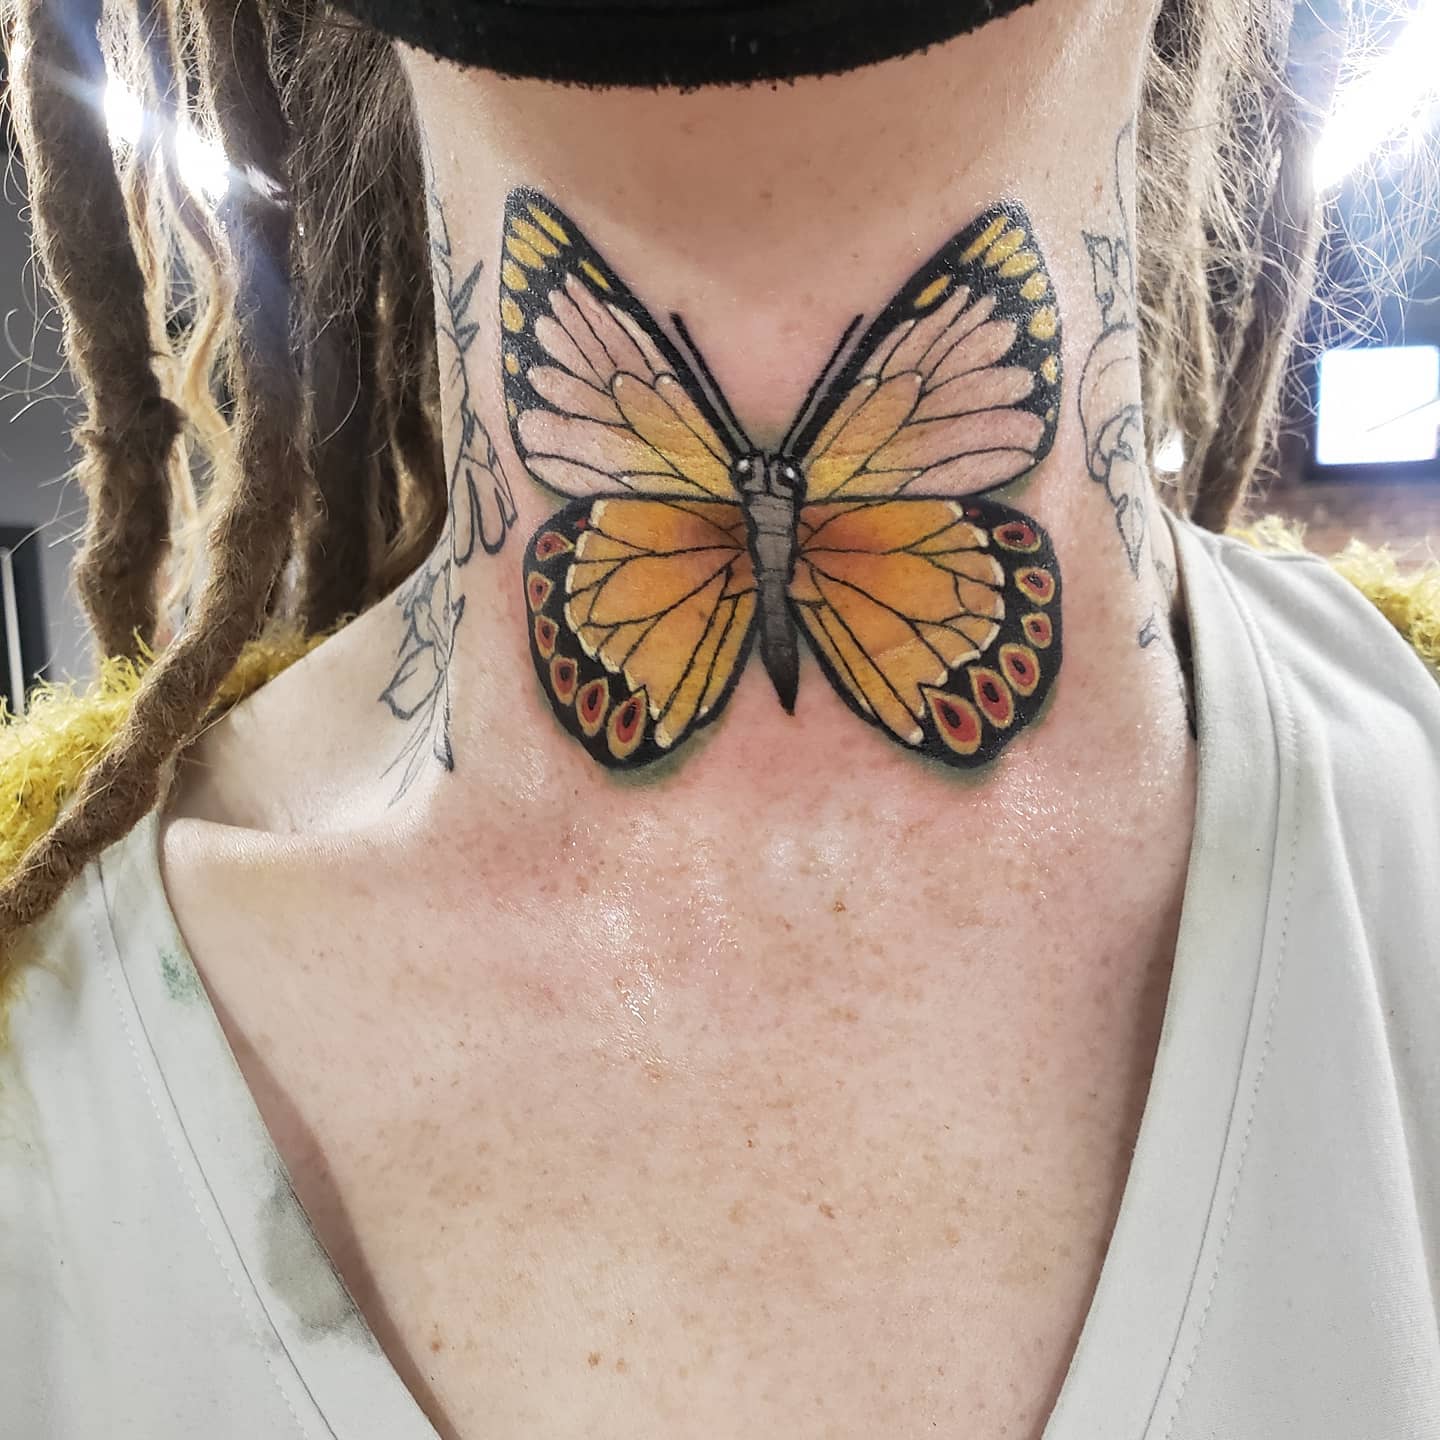 Unique Butterfly Tattoo Designs that will melt your  hearthttpswwwalienstattoocompostthebestbutterflytattoodesigns in20227butterflytattoodesignsthatwillmeltyourheart